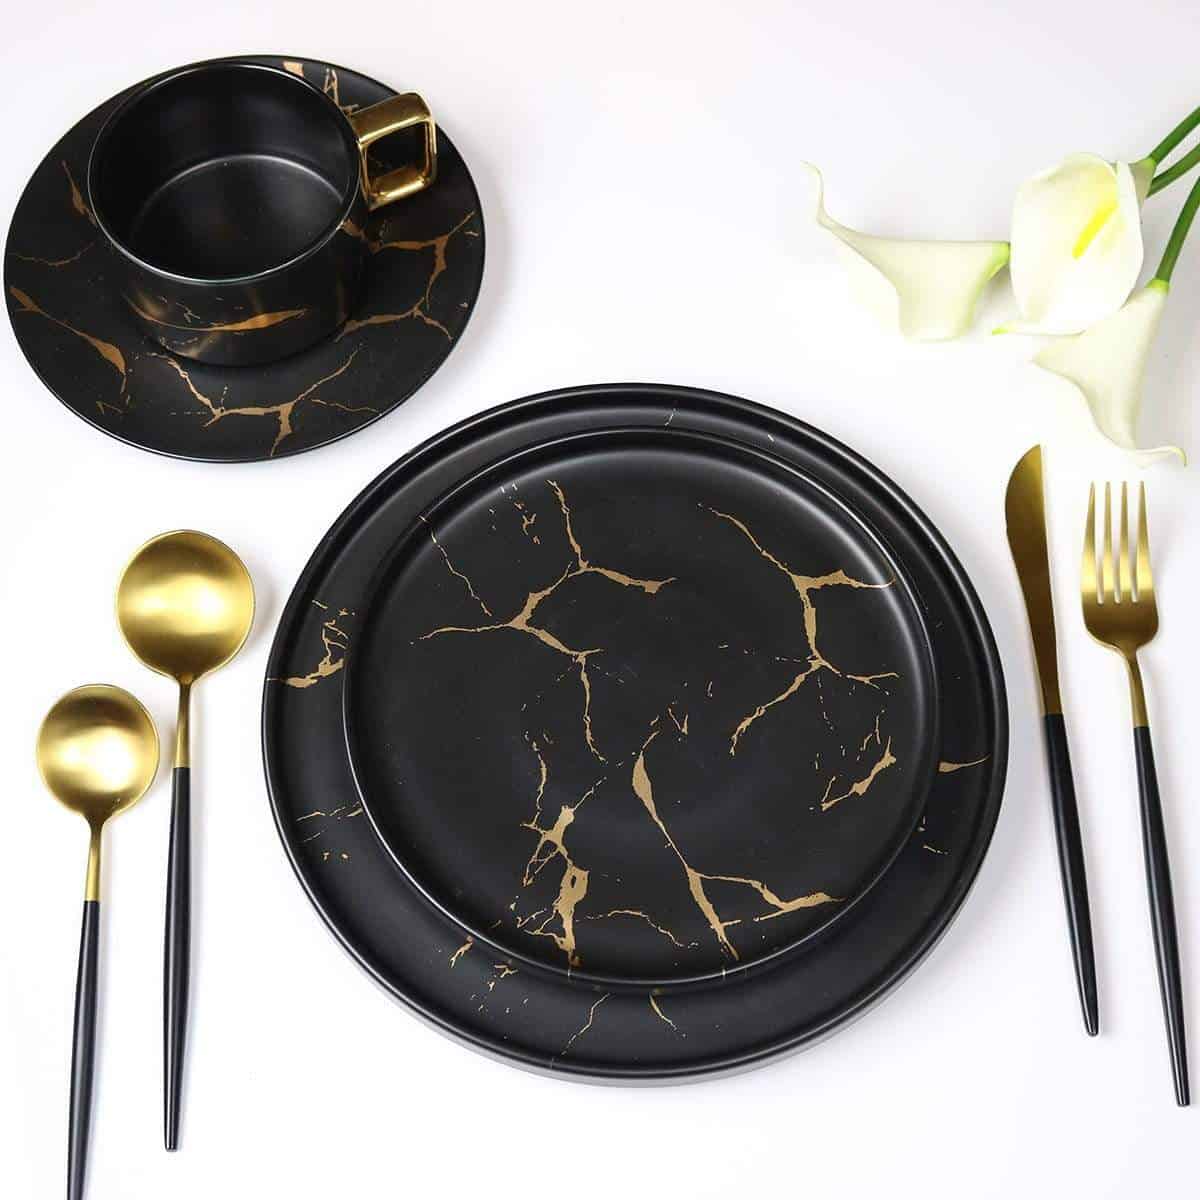 Gold Veined Black Dinner Plate -Set of 4